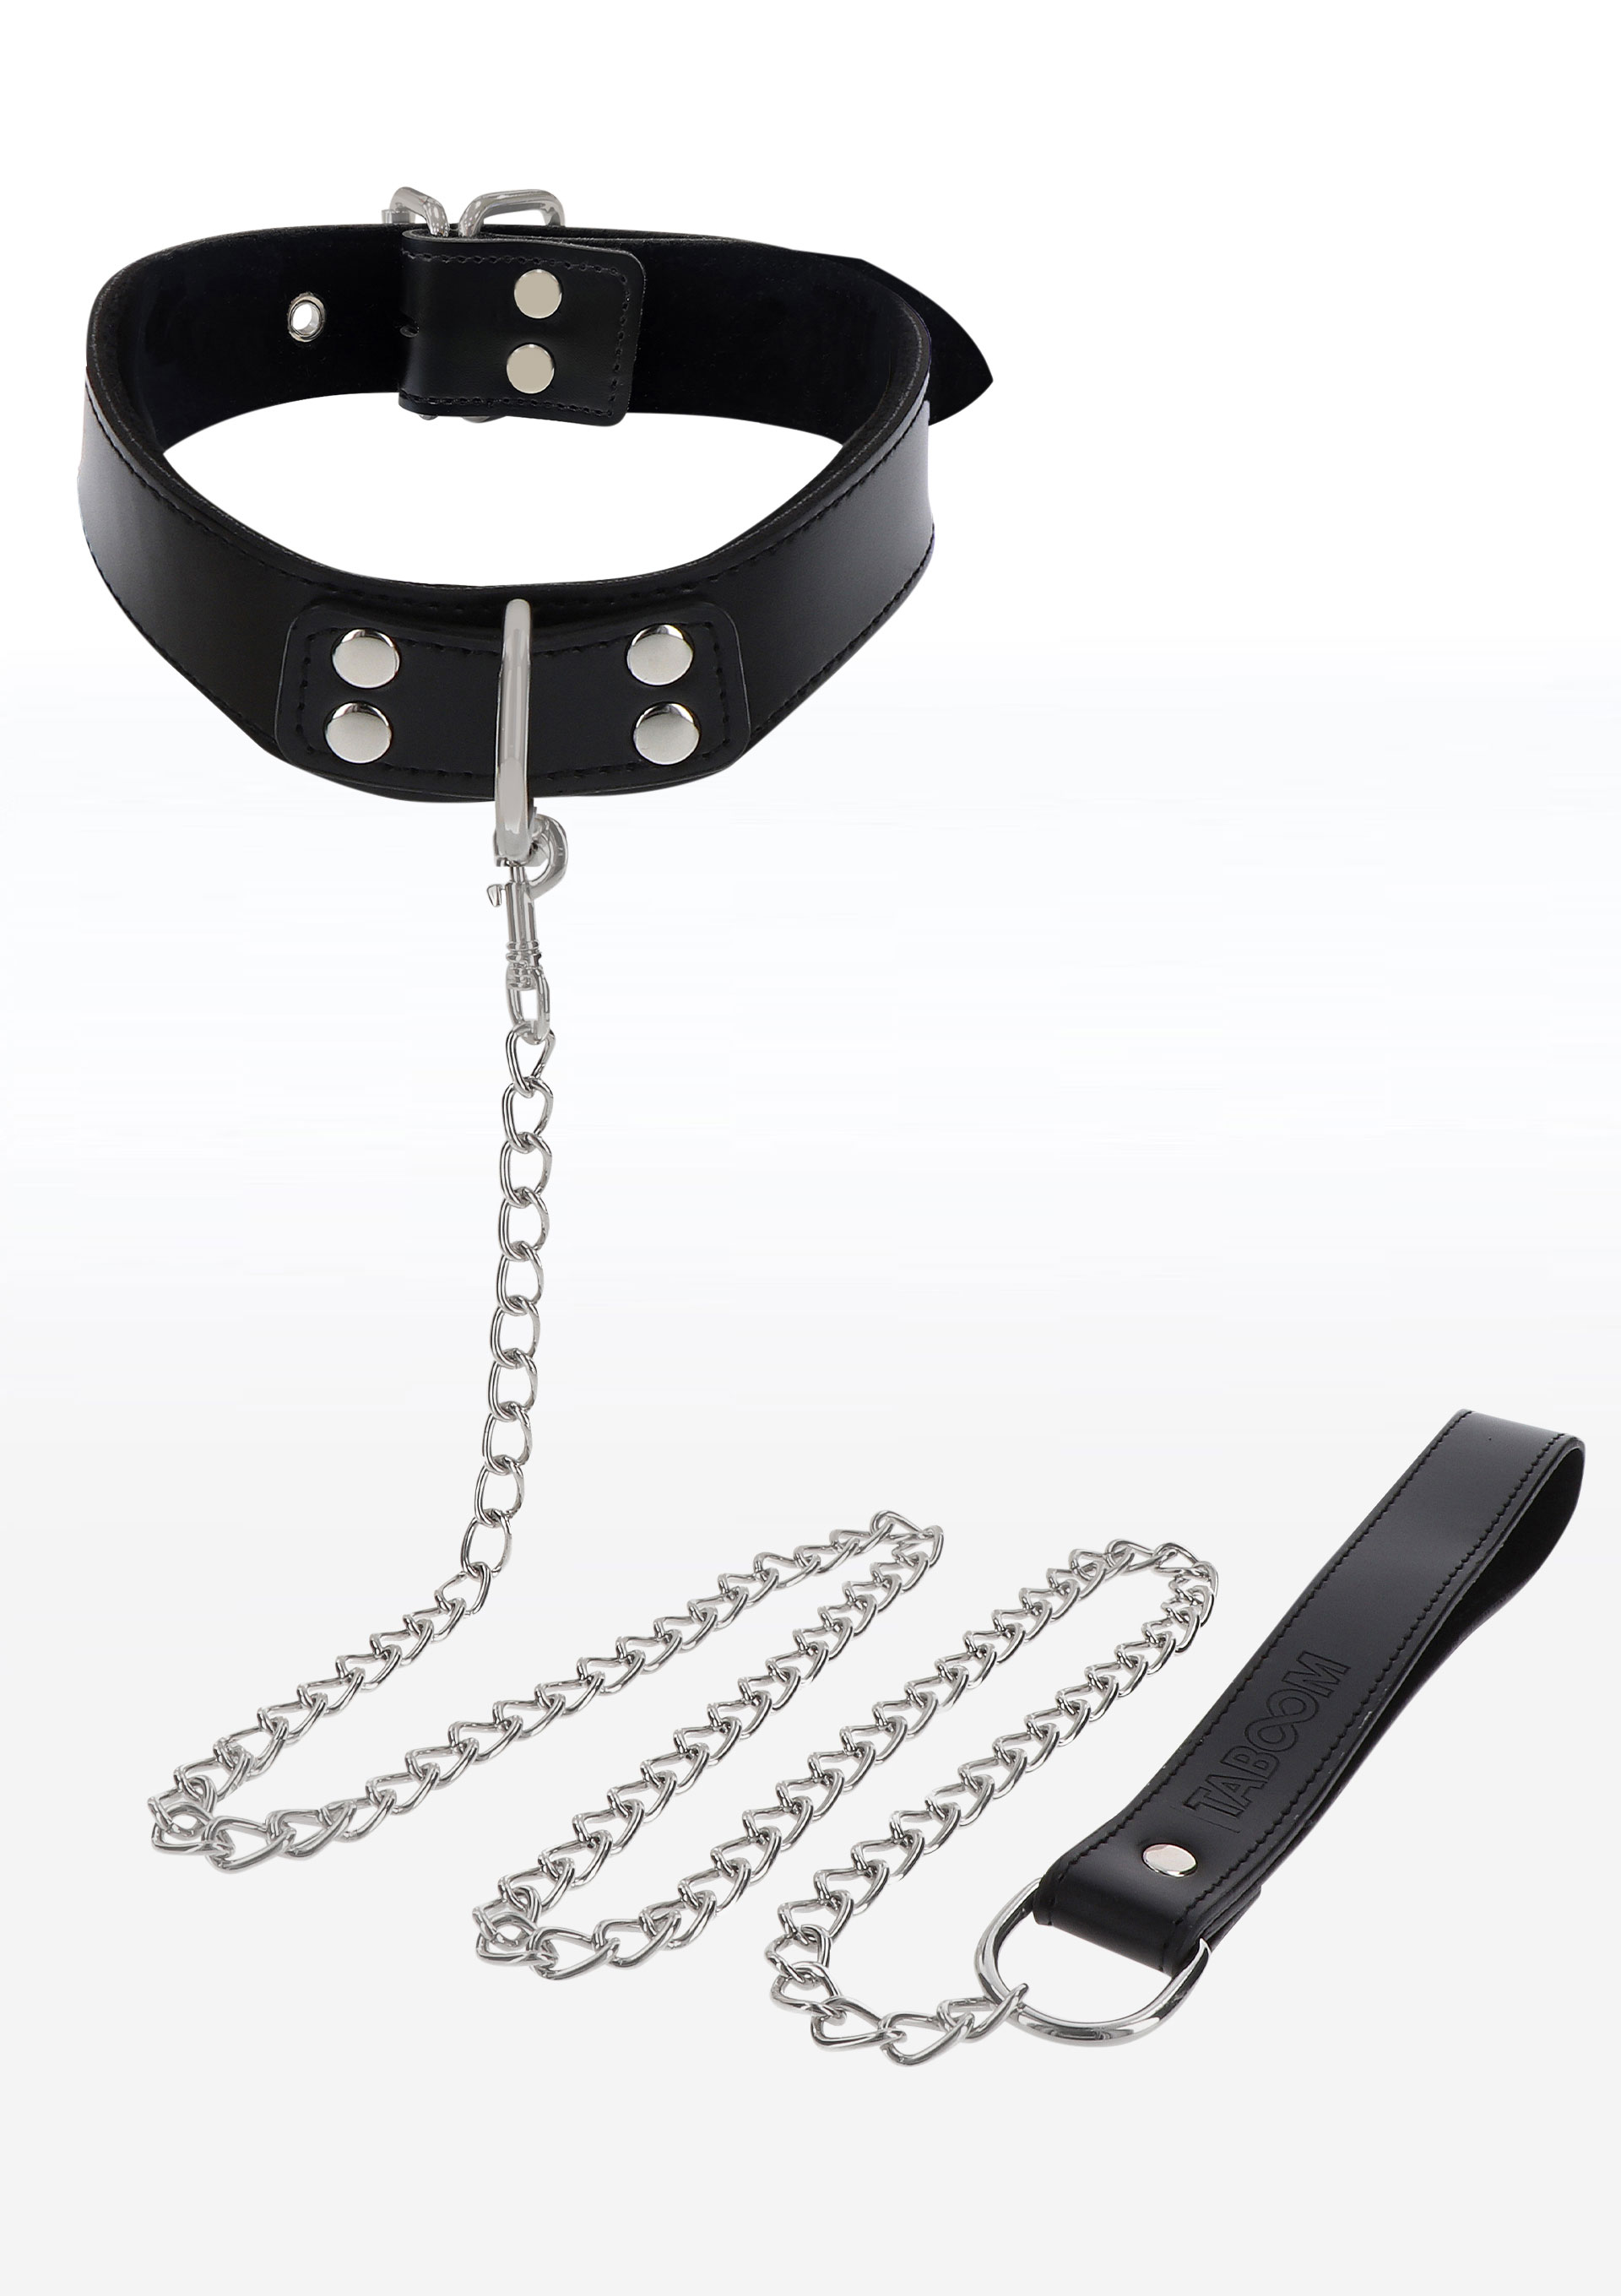 Taboom - Taboom Elegant Collar and Chain Leash